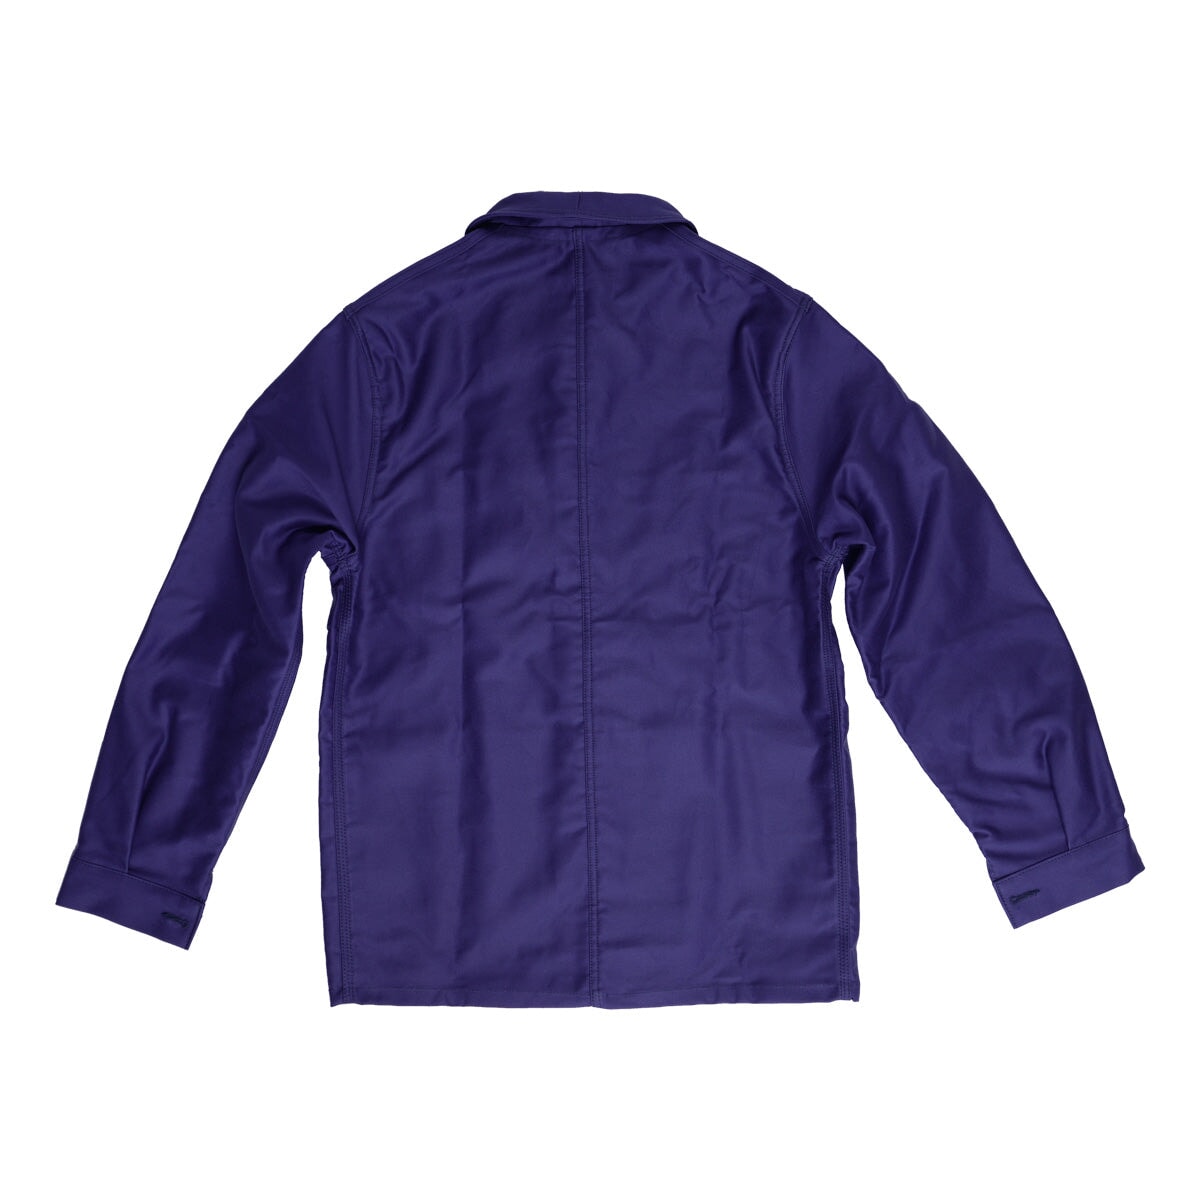 Jacket Vintage French Blue Coat Work Wear Button up Workwear 